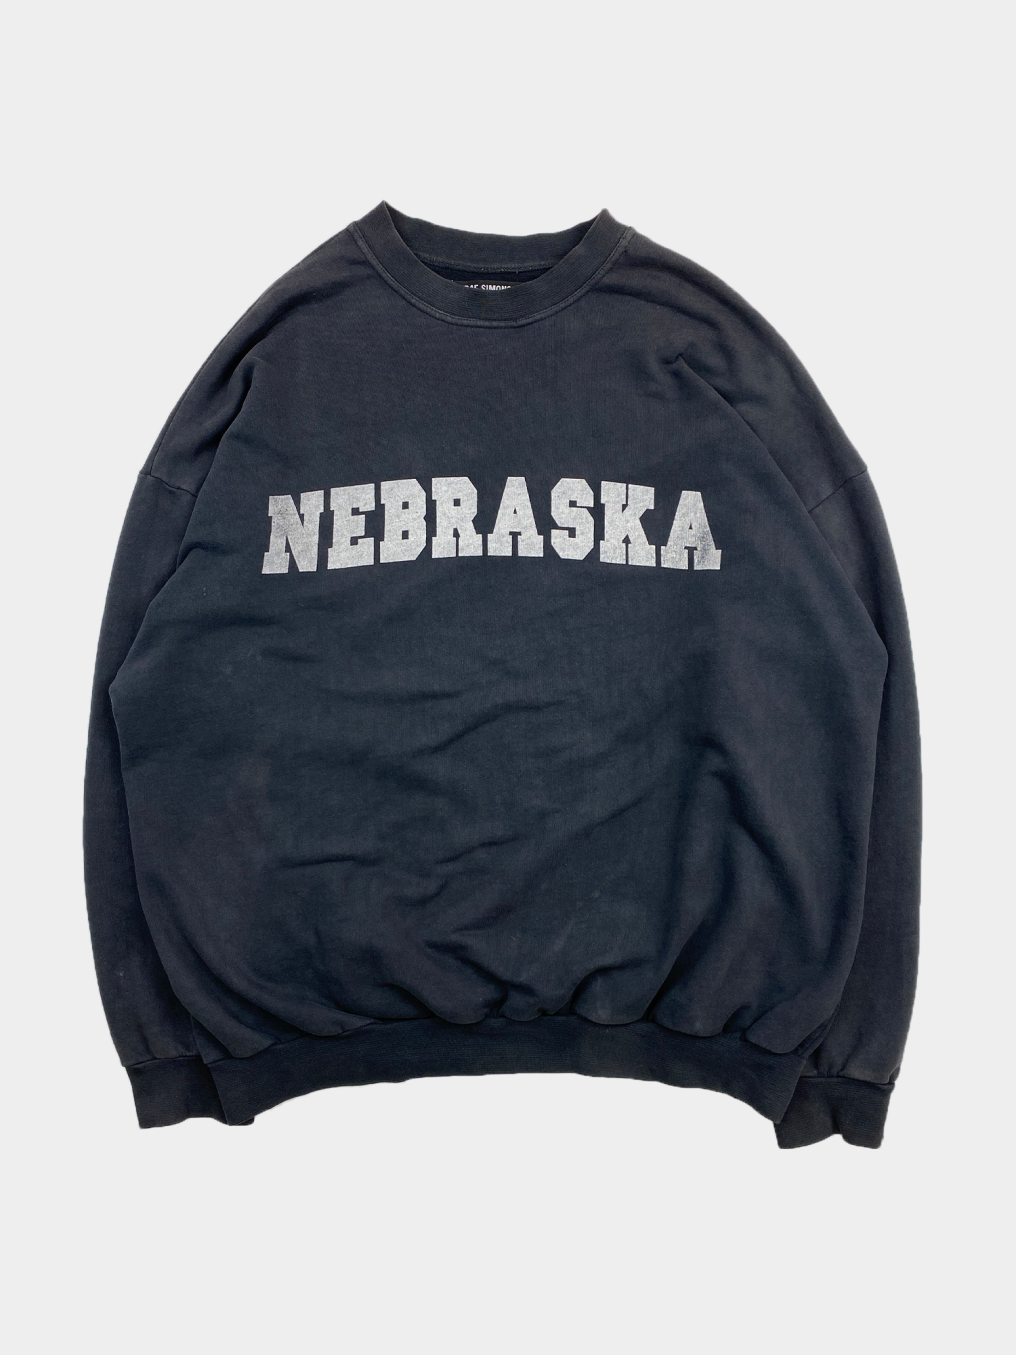 RAF SIMONS Nebraska Sweater - ARCHIVED